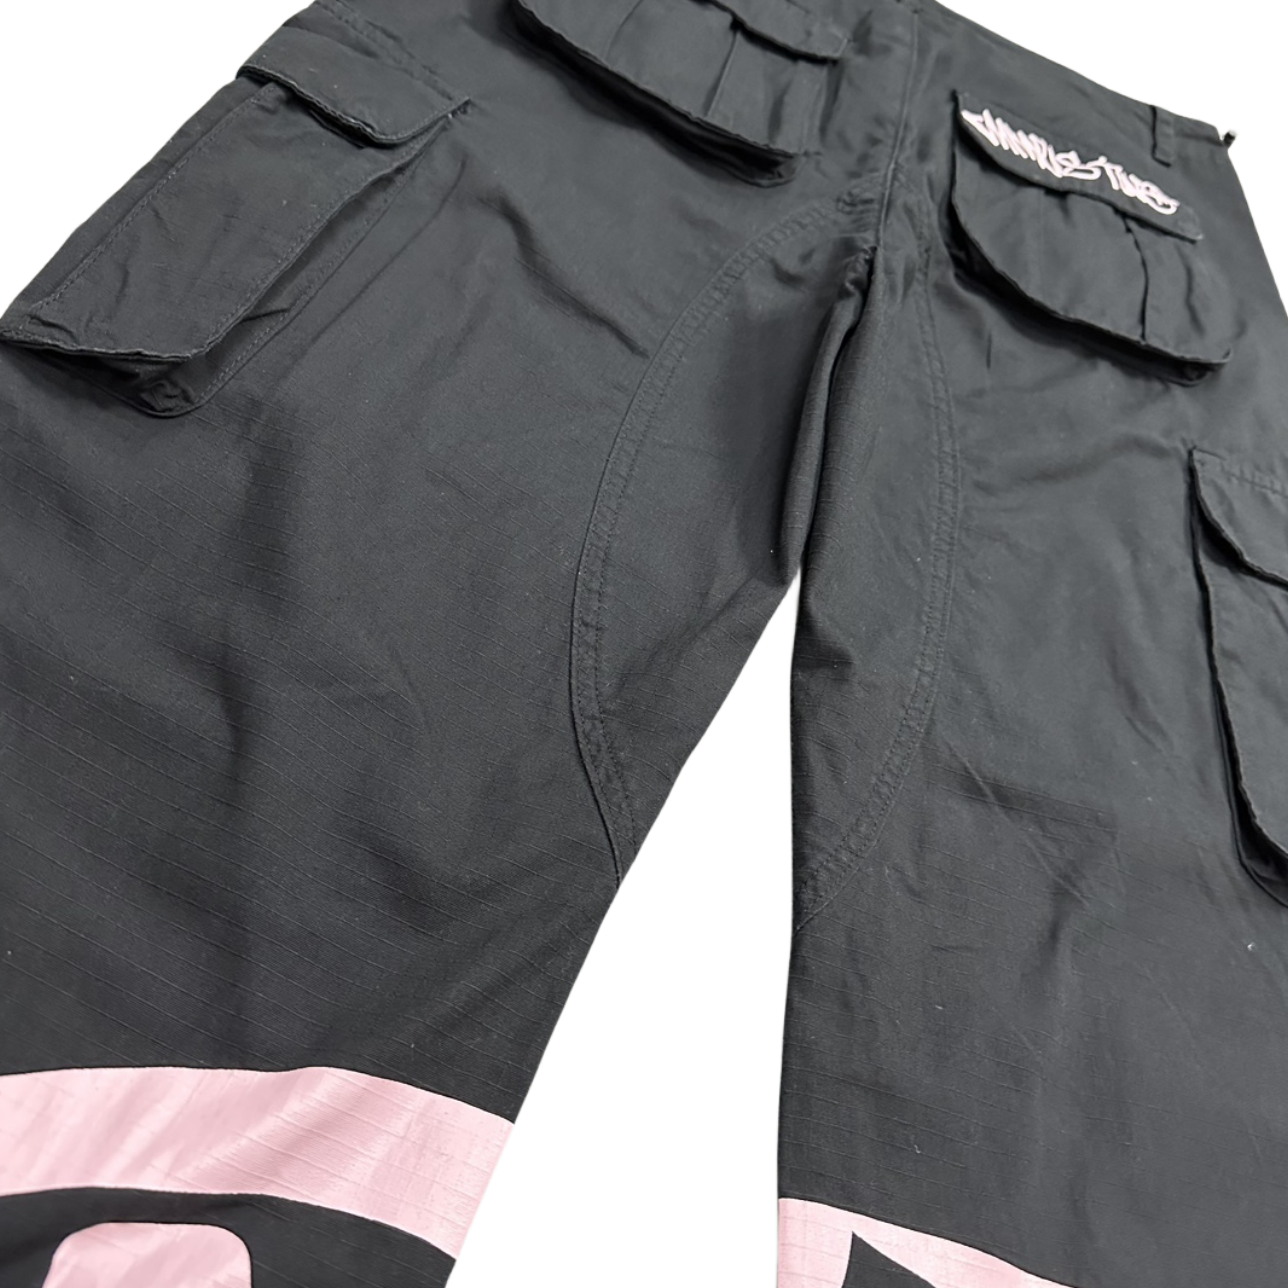 Minus Two Pantalon Cargo Y2K Streetwear Salopette Jeans Long Joggers Pantalon Femme Homme - Noir/Rose